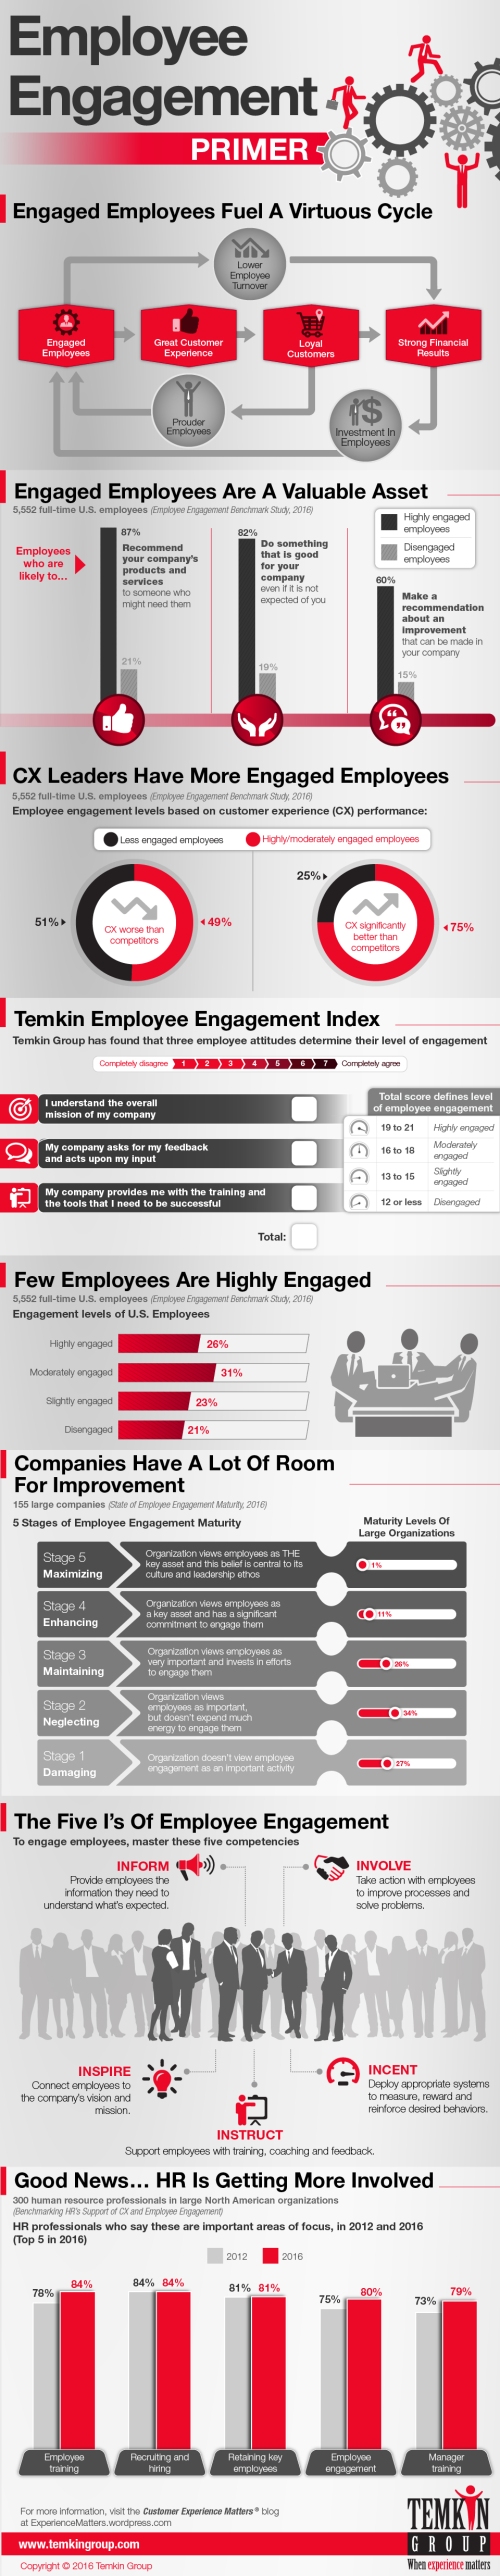 1609_Employee Engagement Infographic